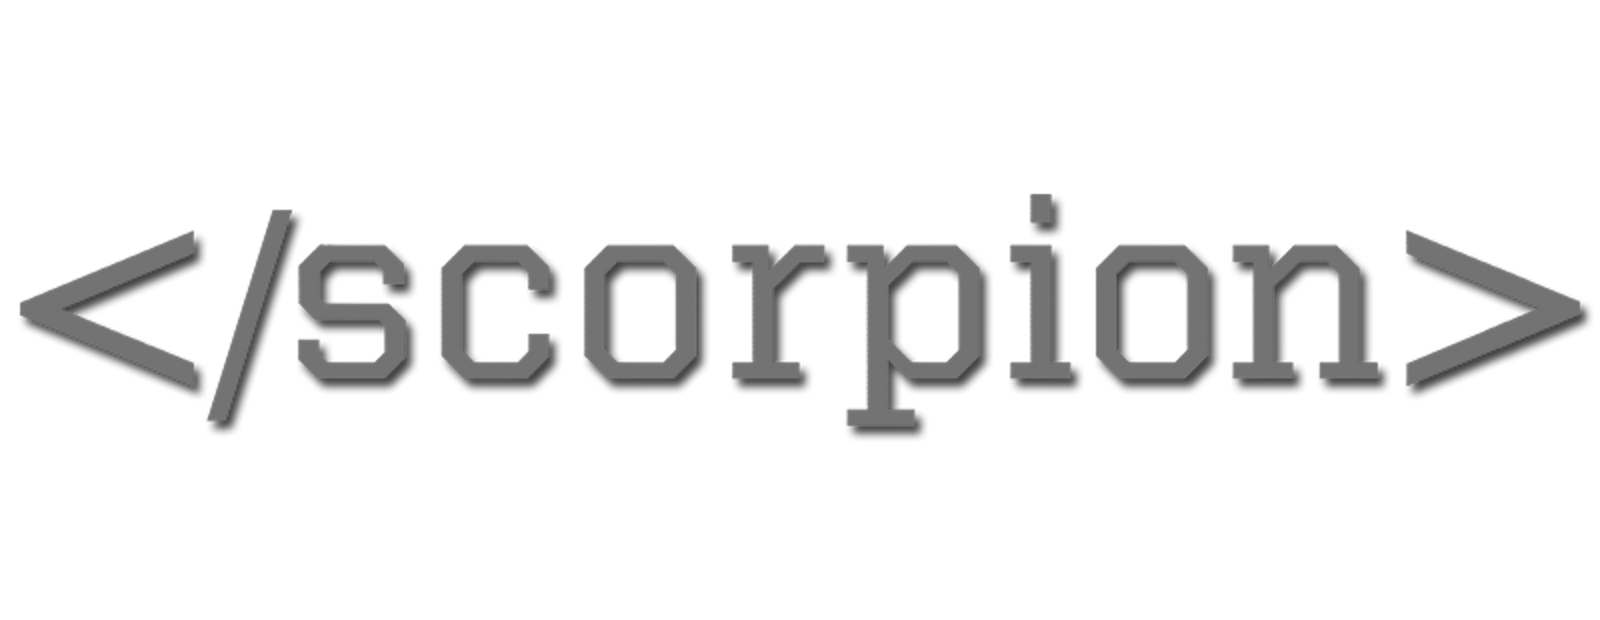 Scorpion logo.